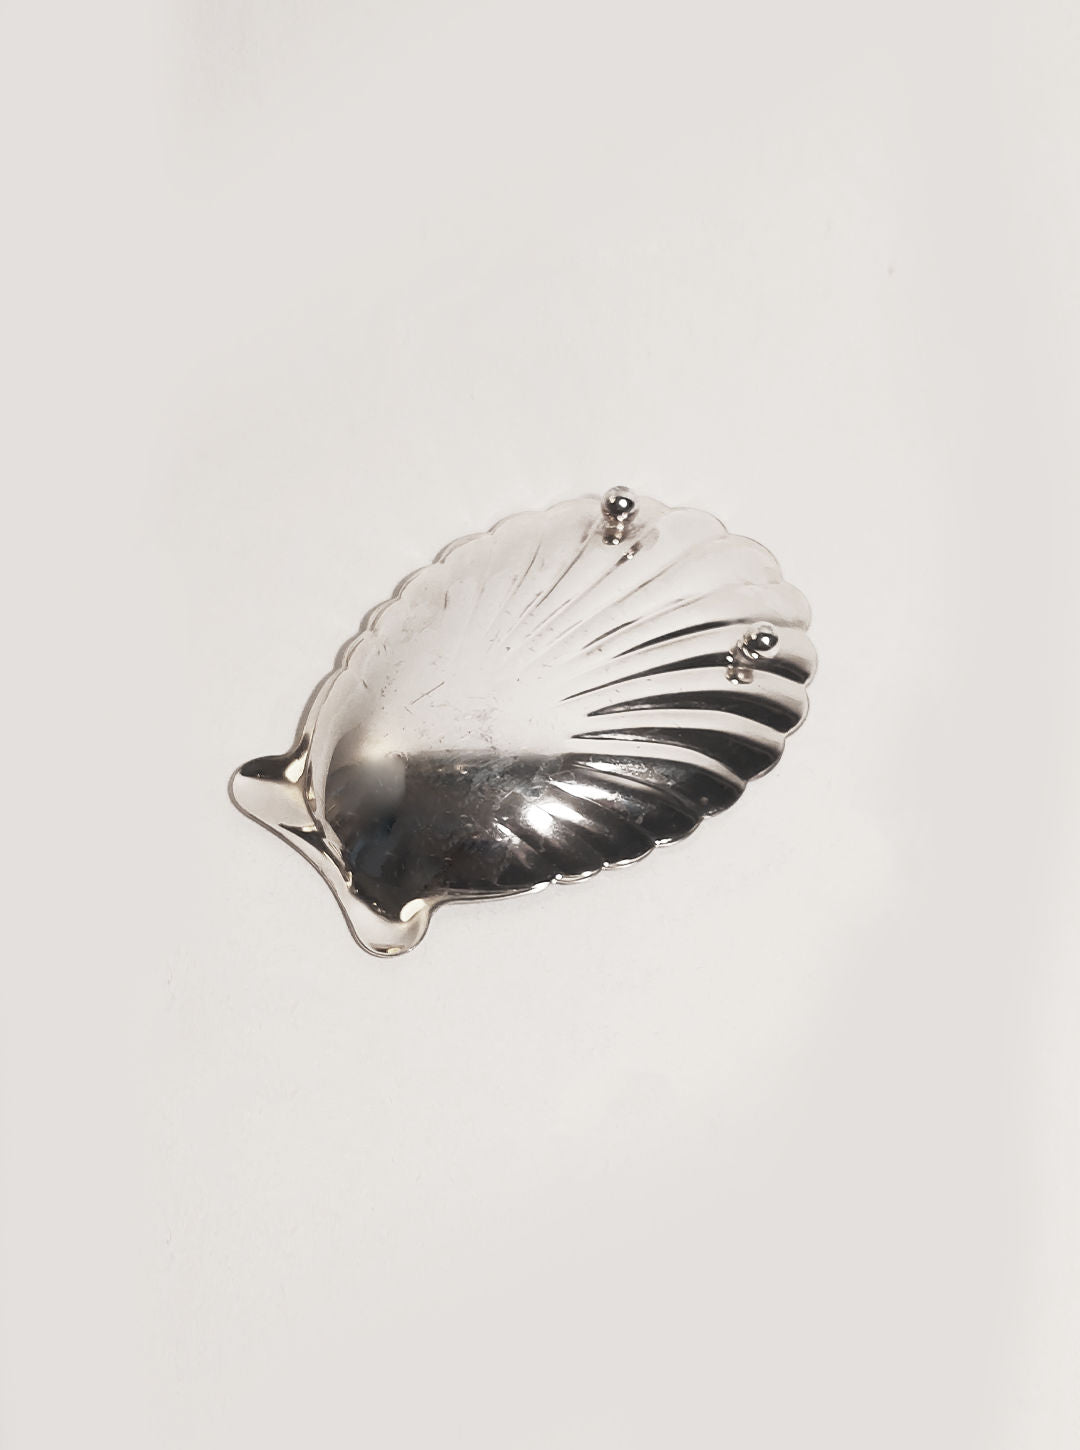  Decorative small shell vide poche with elegant design and craftsmanship